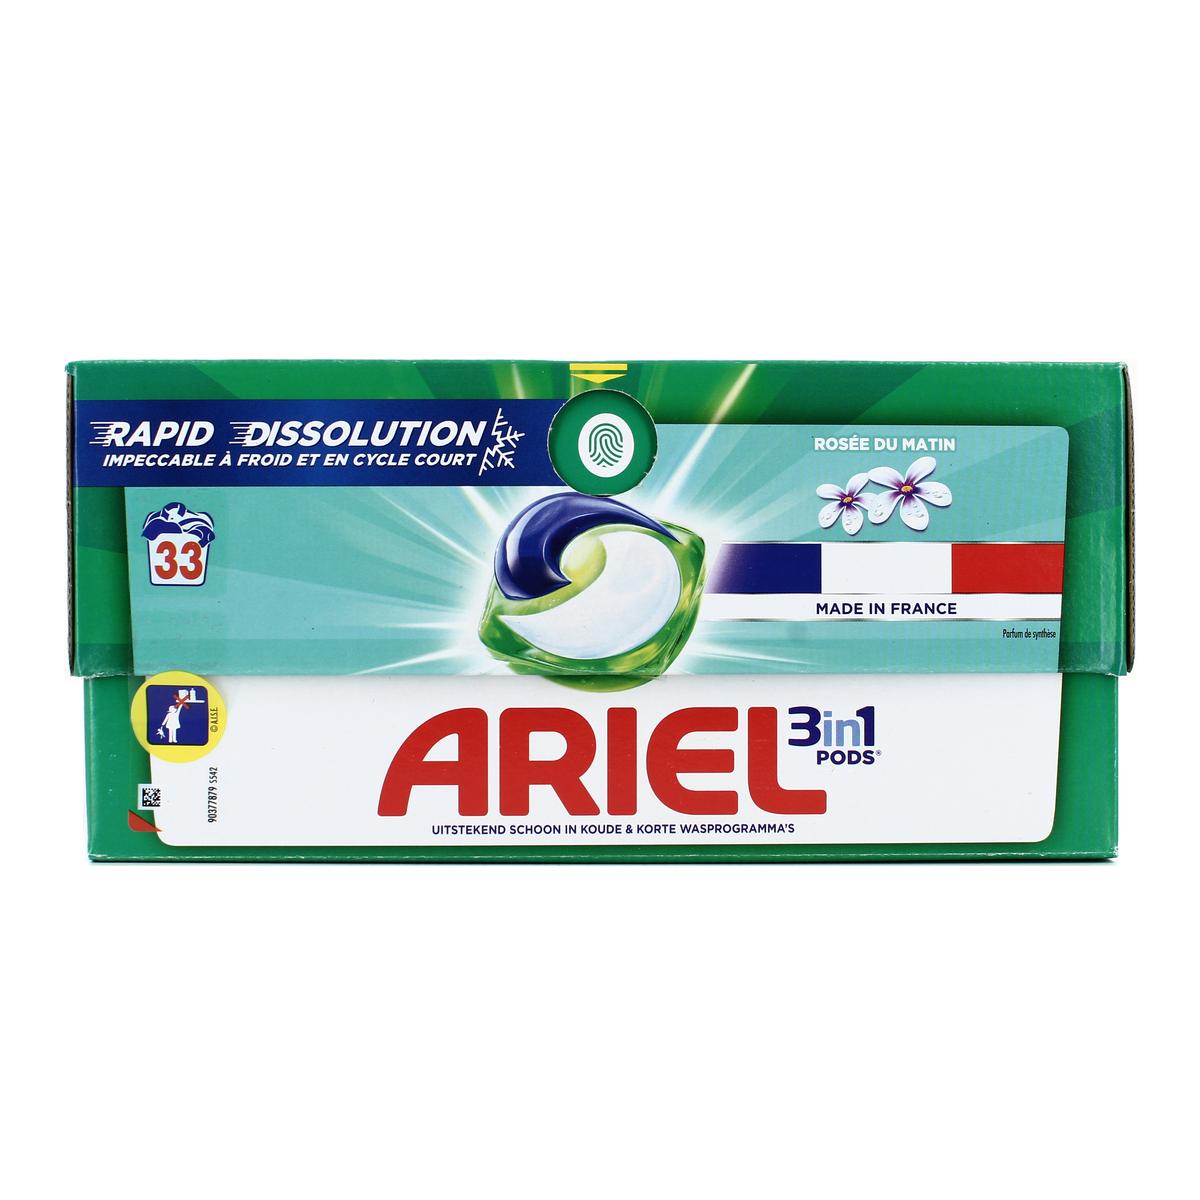 Ariel All-in-1 Pods & Lessive Capsules 40 Lavage…